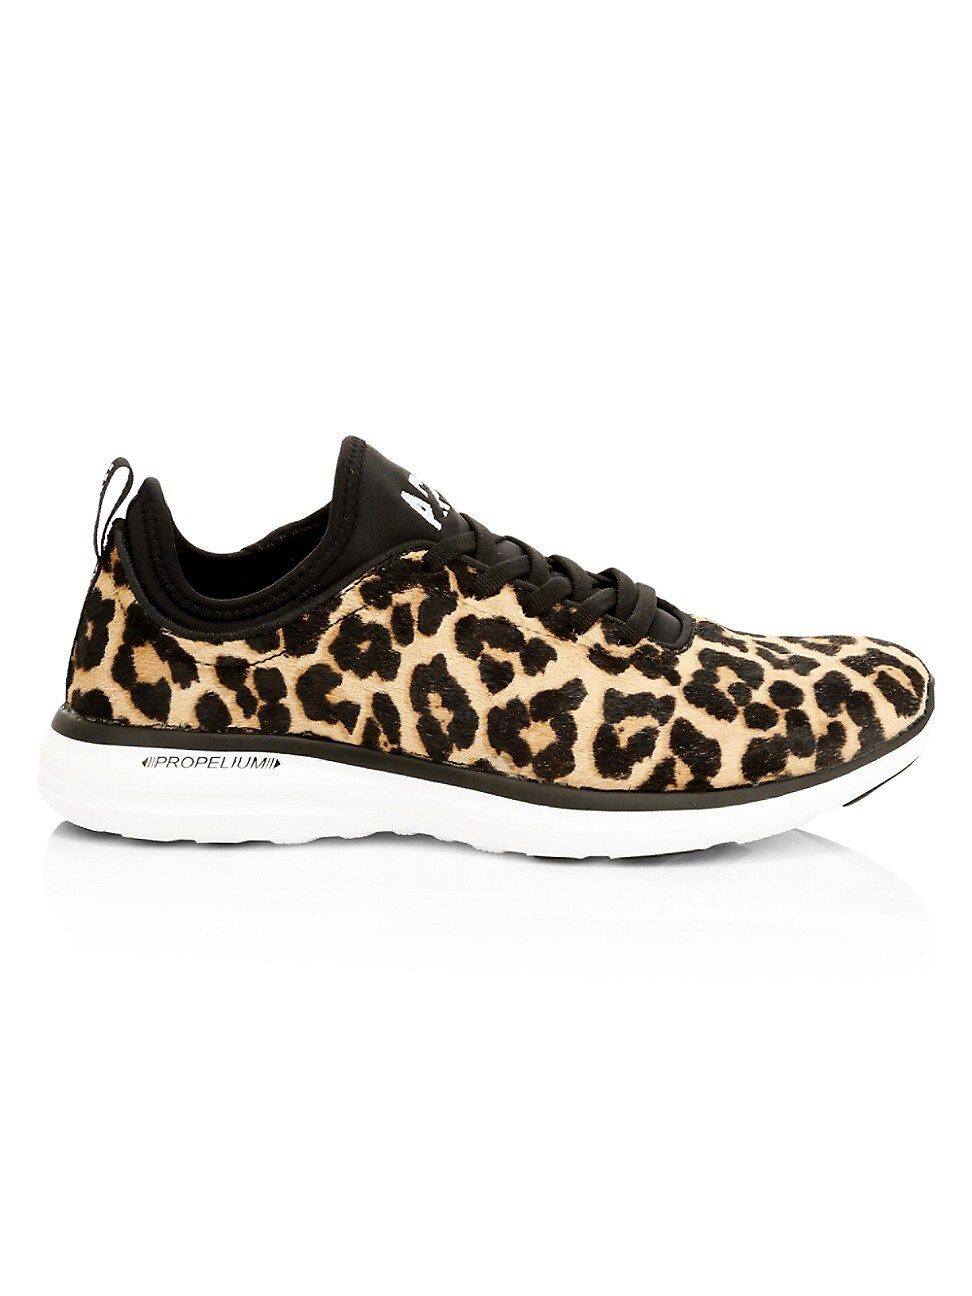 APL Athletic Propulsion Labs Women's Women's TechLoom Pro Leopard-Print Calf Hair Sneakers - Leopard | Saks Fifth Avenue